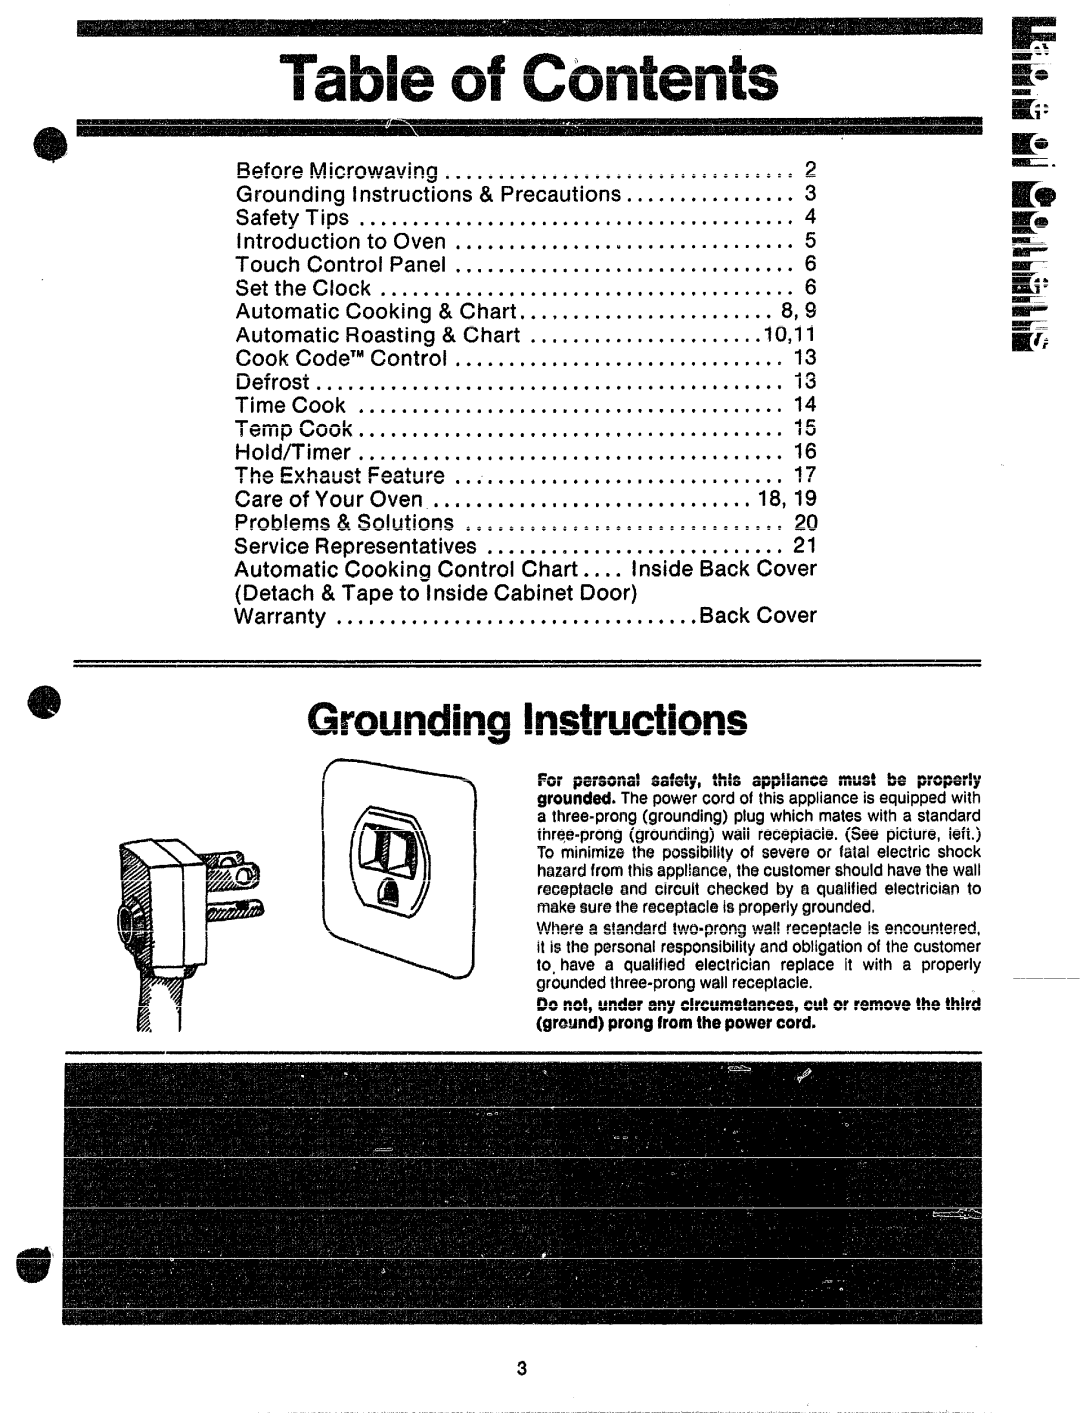 GE JVM60 manual Before Microwaving 